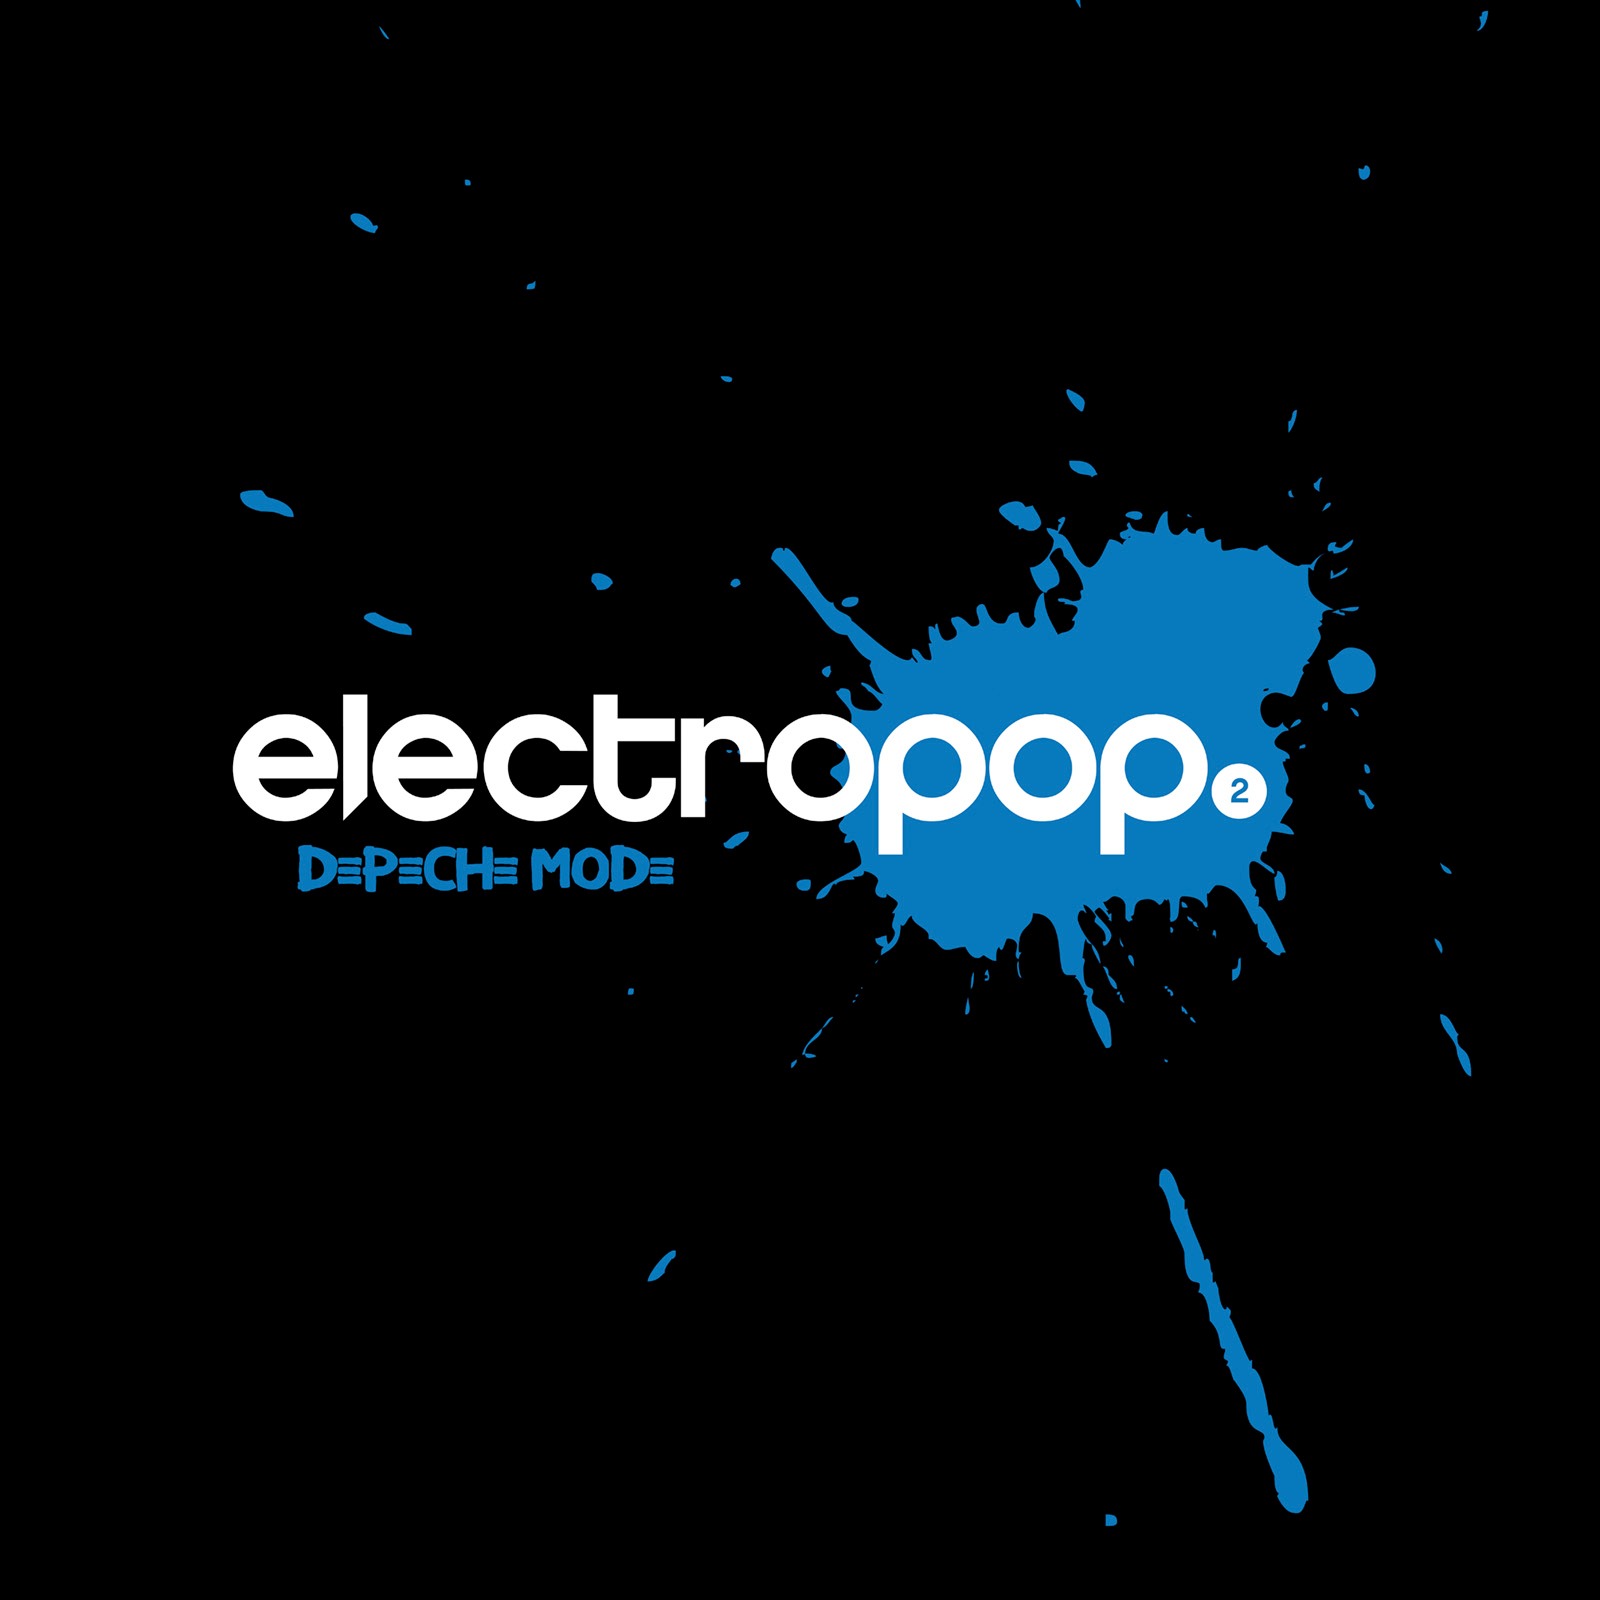 electropop.depeche mode 2